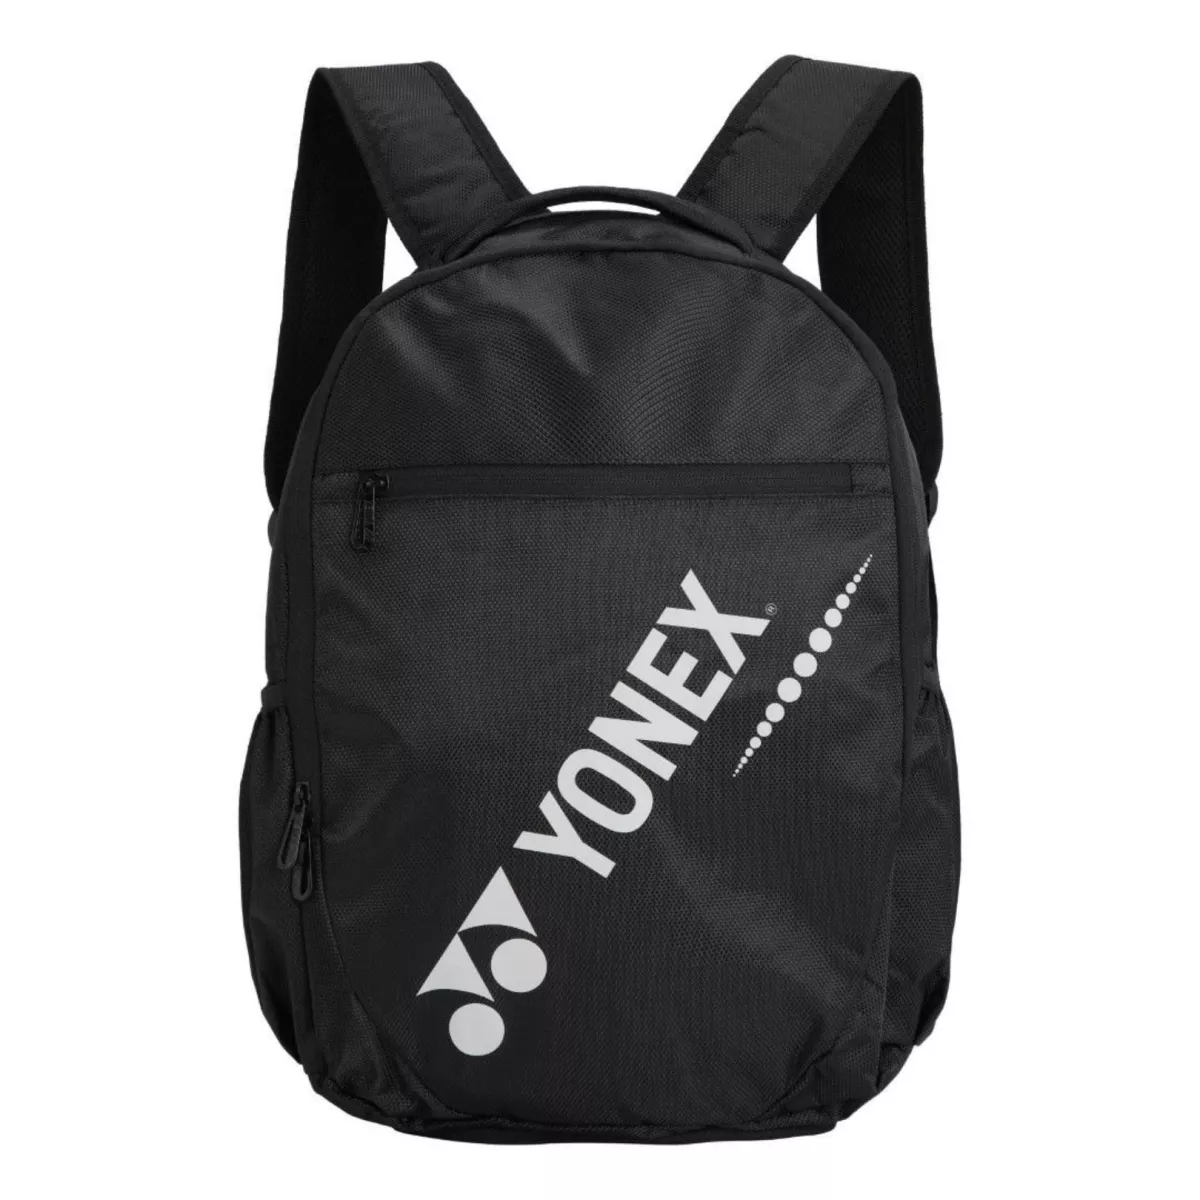 #3 - Yonex Backpack Pro 222148SC Black